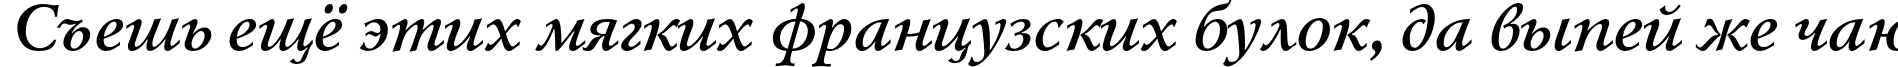 Пример написания шрифтом LazurskiC Bold Italic текста на русском